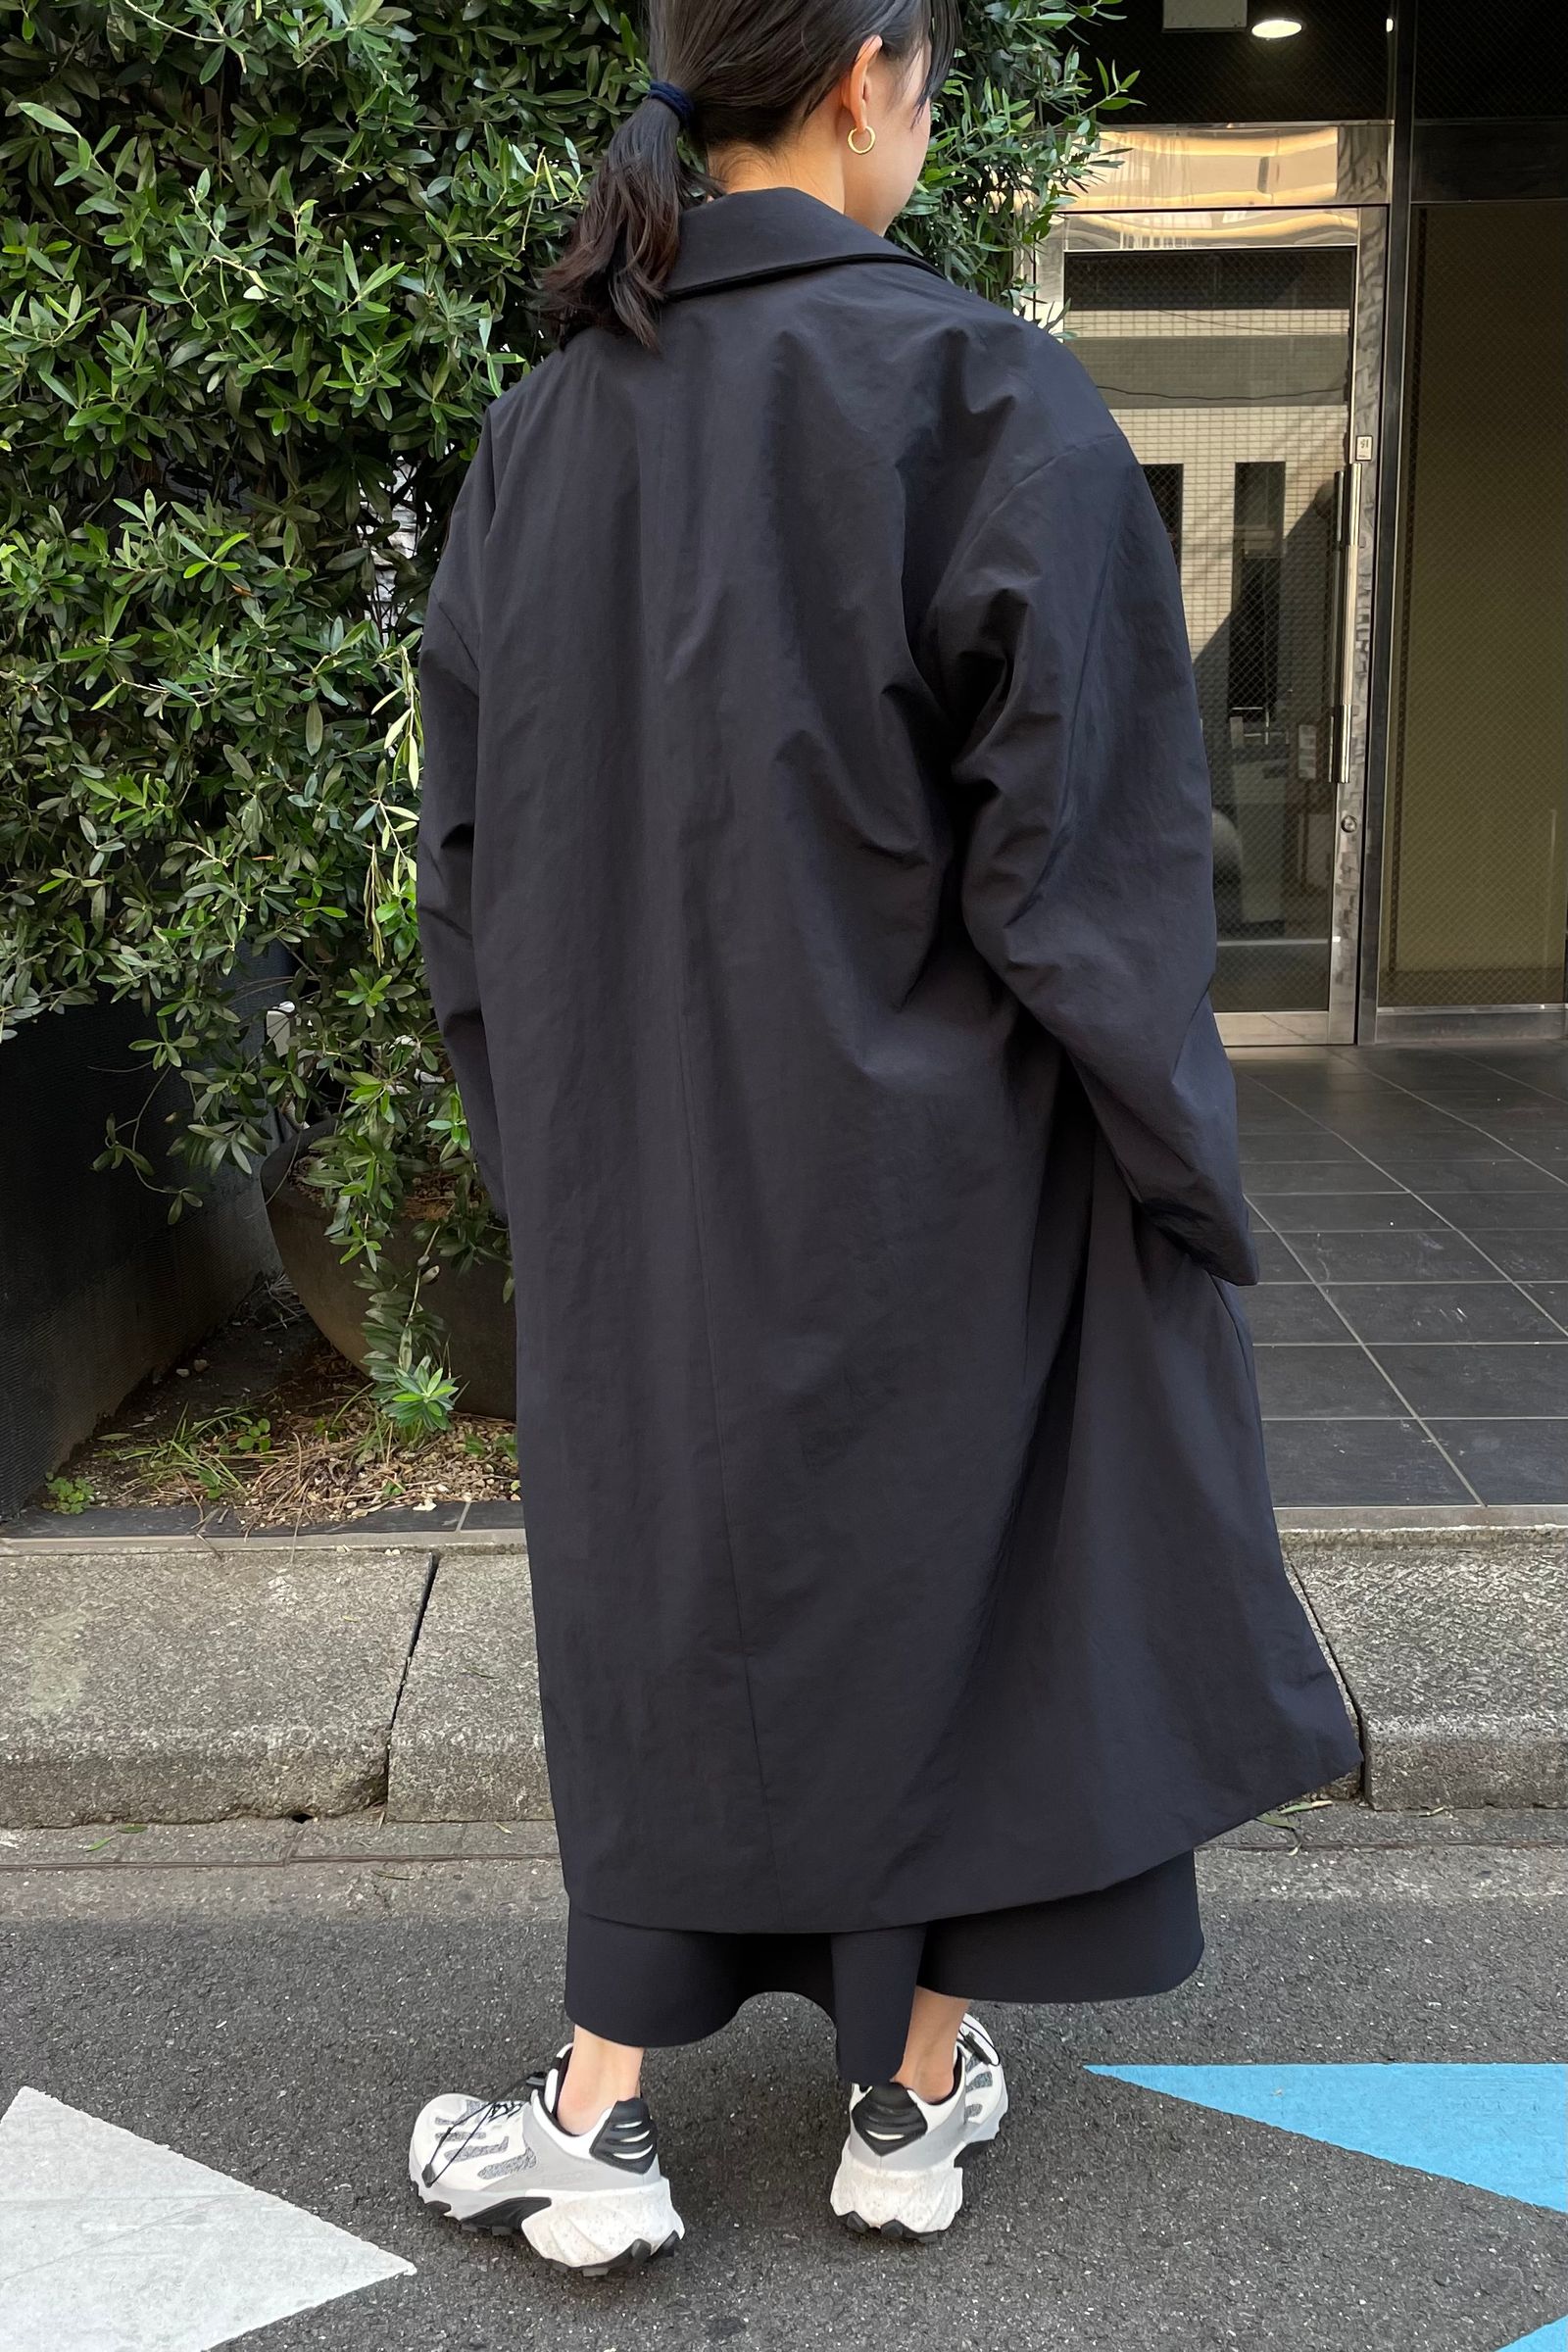 ATON Asako Nylon Hooded Coat - モッズコート